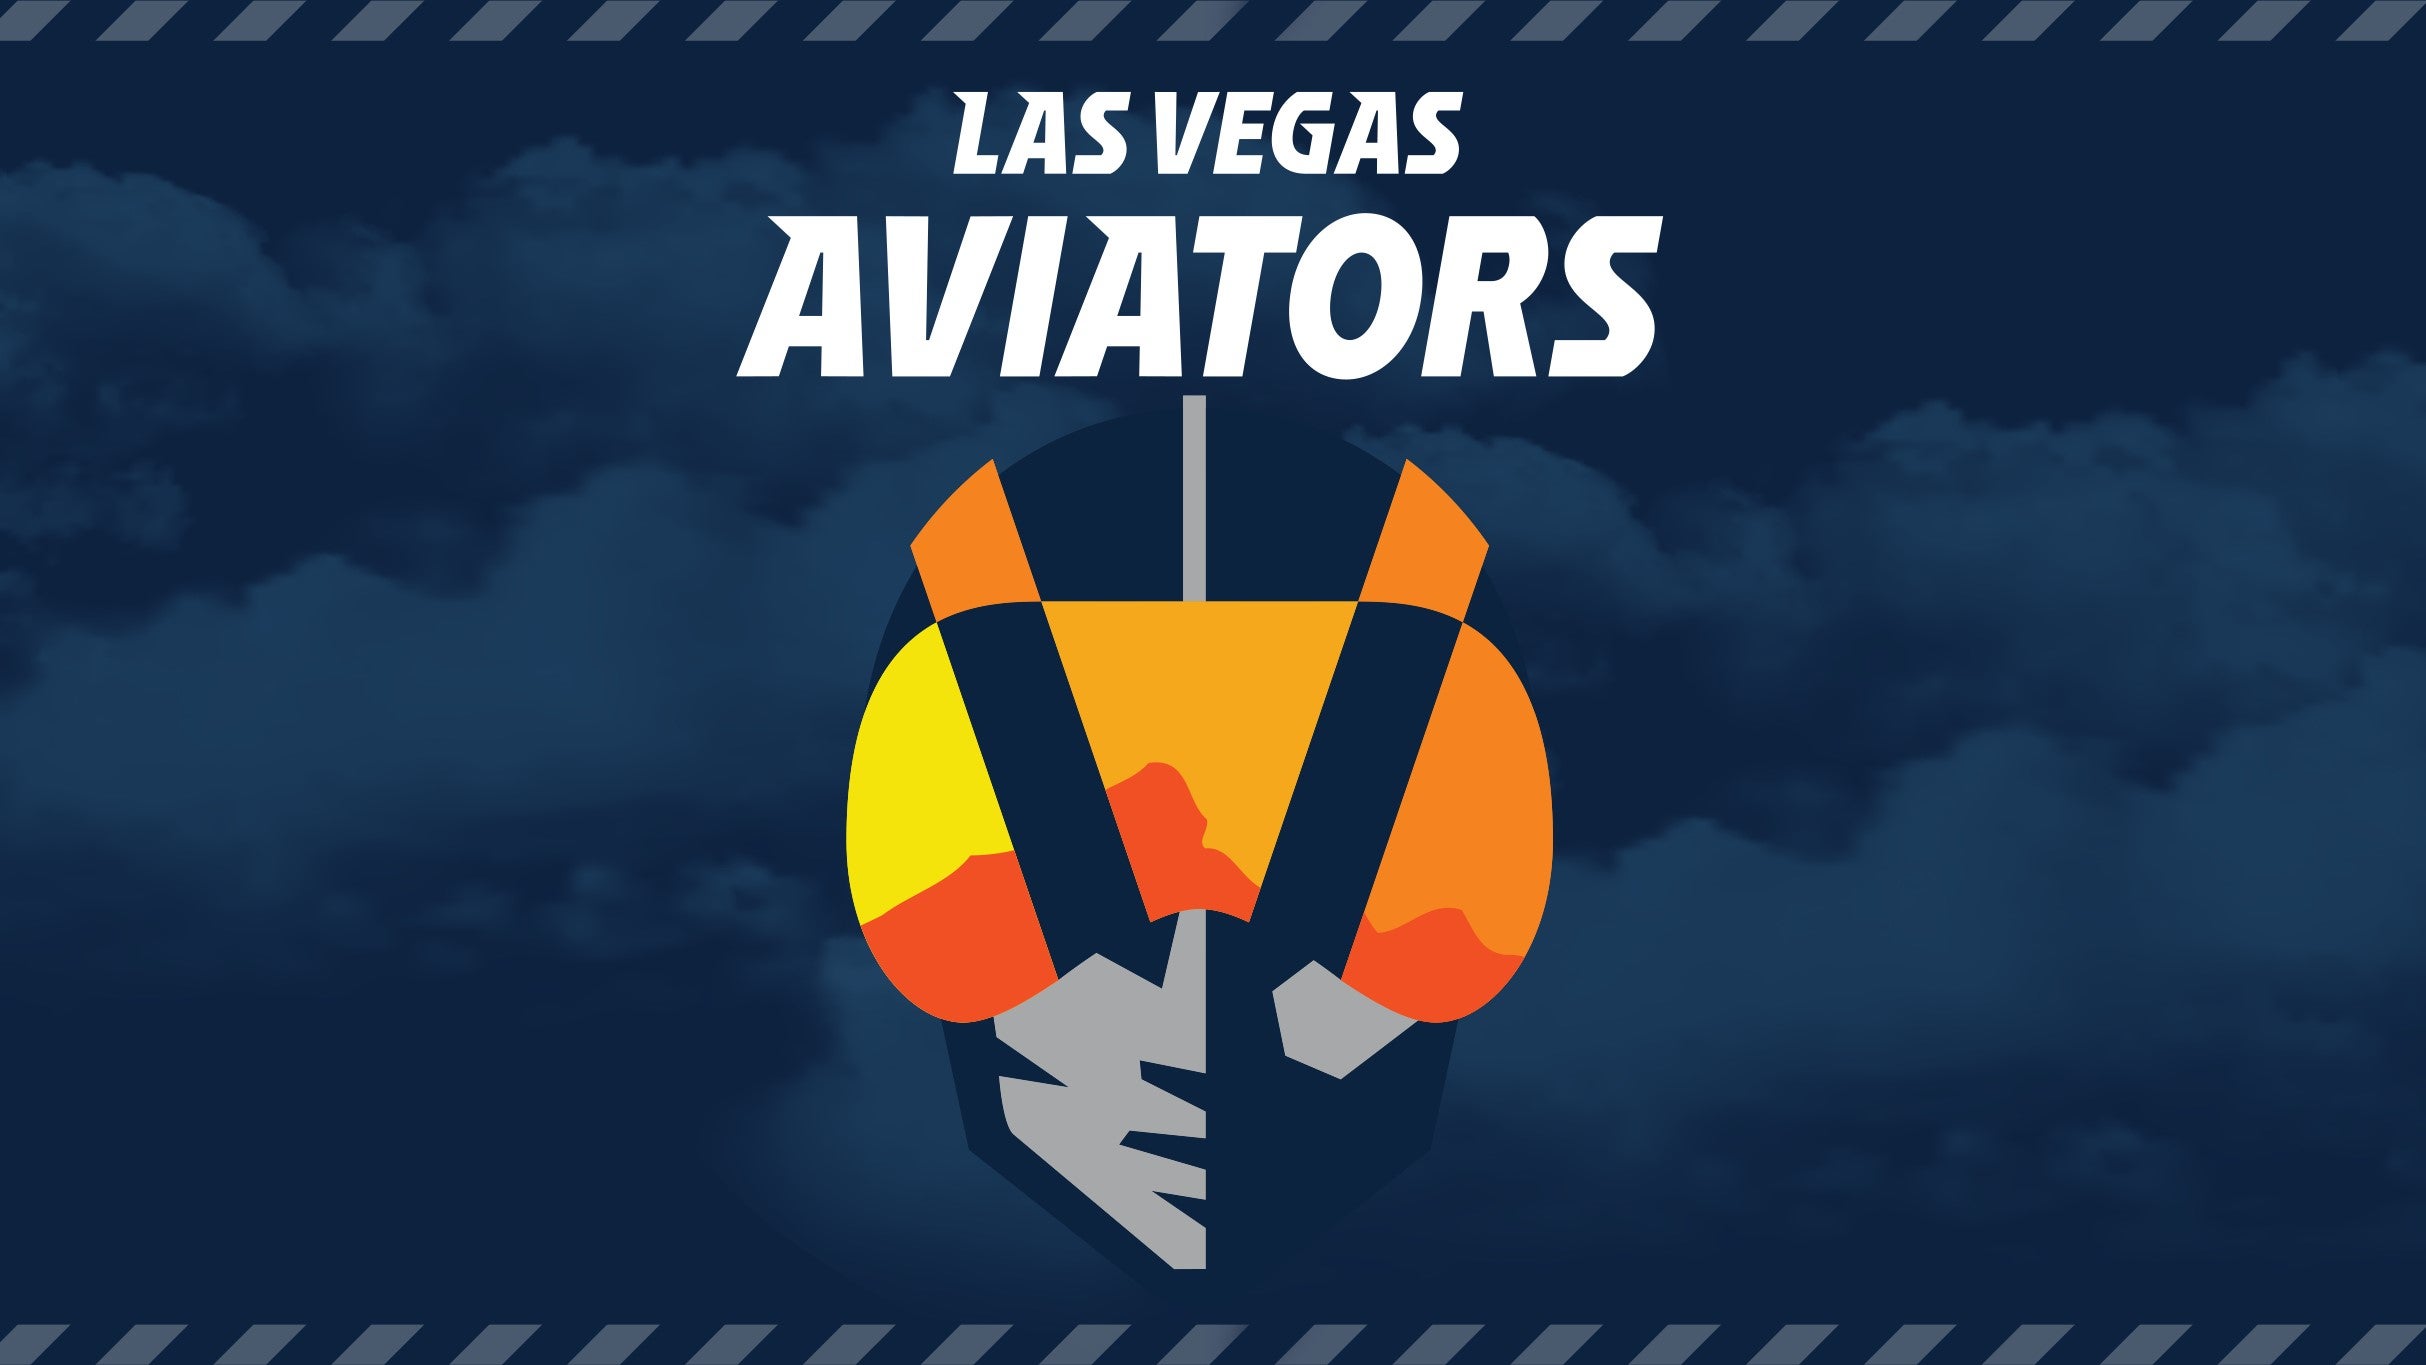 Las Vegas Aviators vs. Oklahoma City Baseball Club presales in Las Vegas